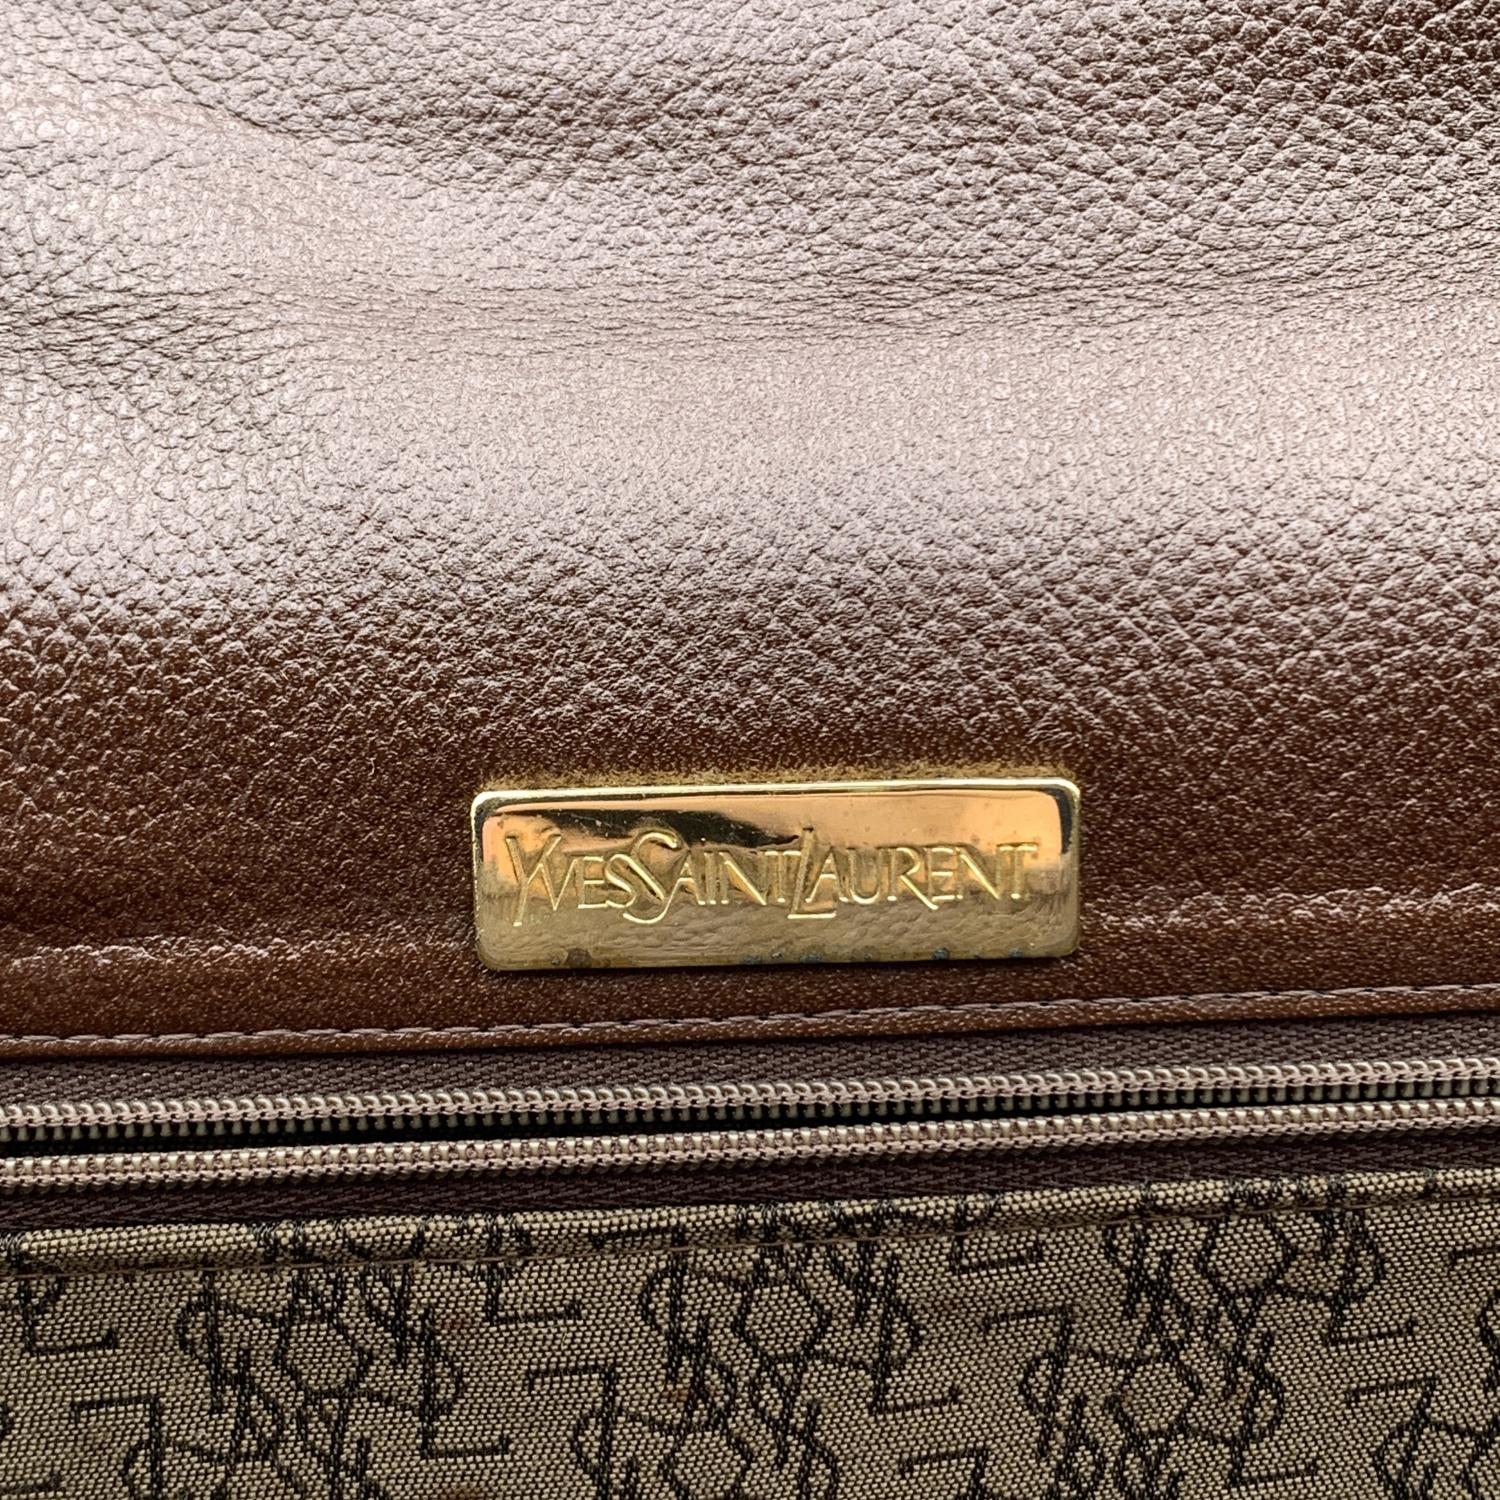 Yves Saint Laurent Vintage Brown Leather Clutch Bag Handbag 1